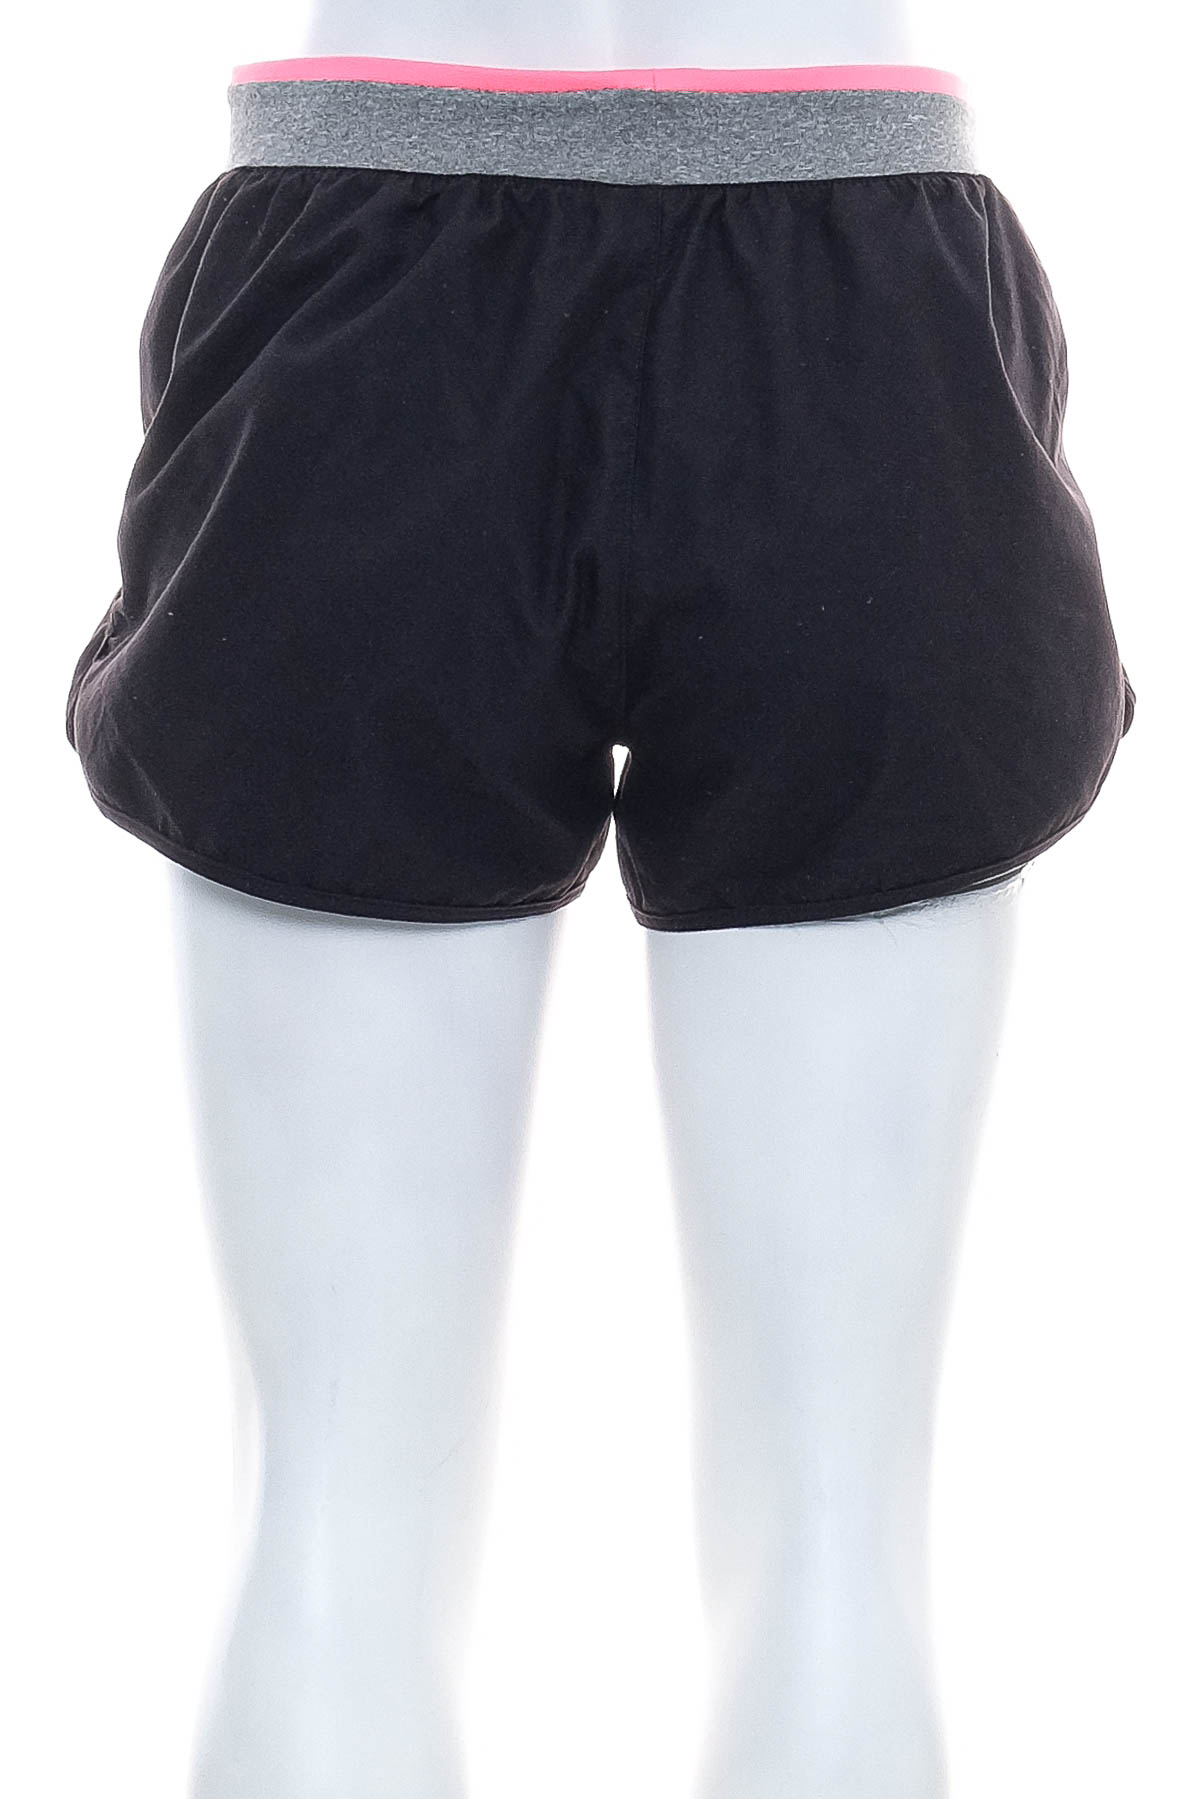 Women's shorts - Domyos - 1